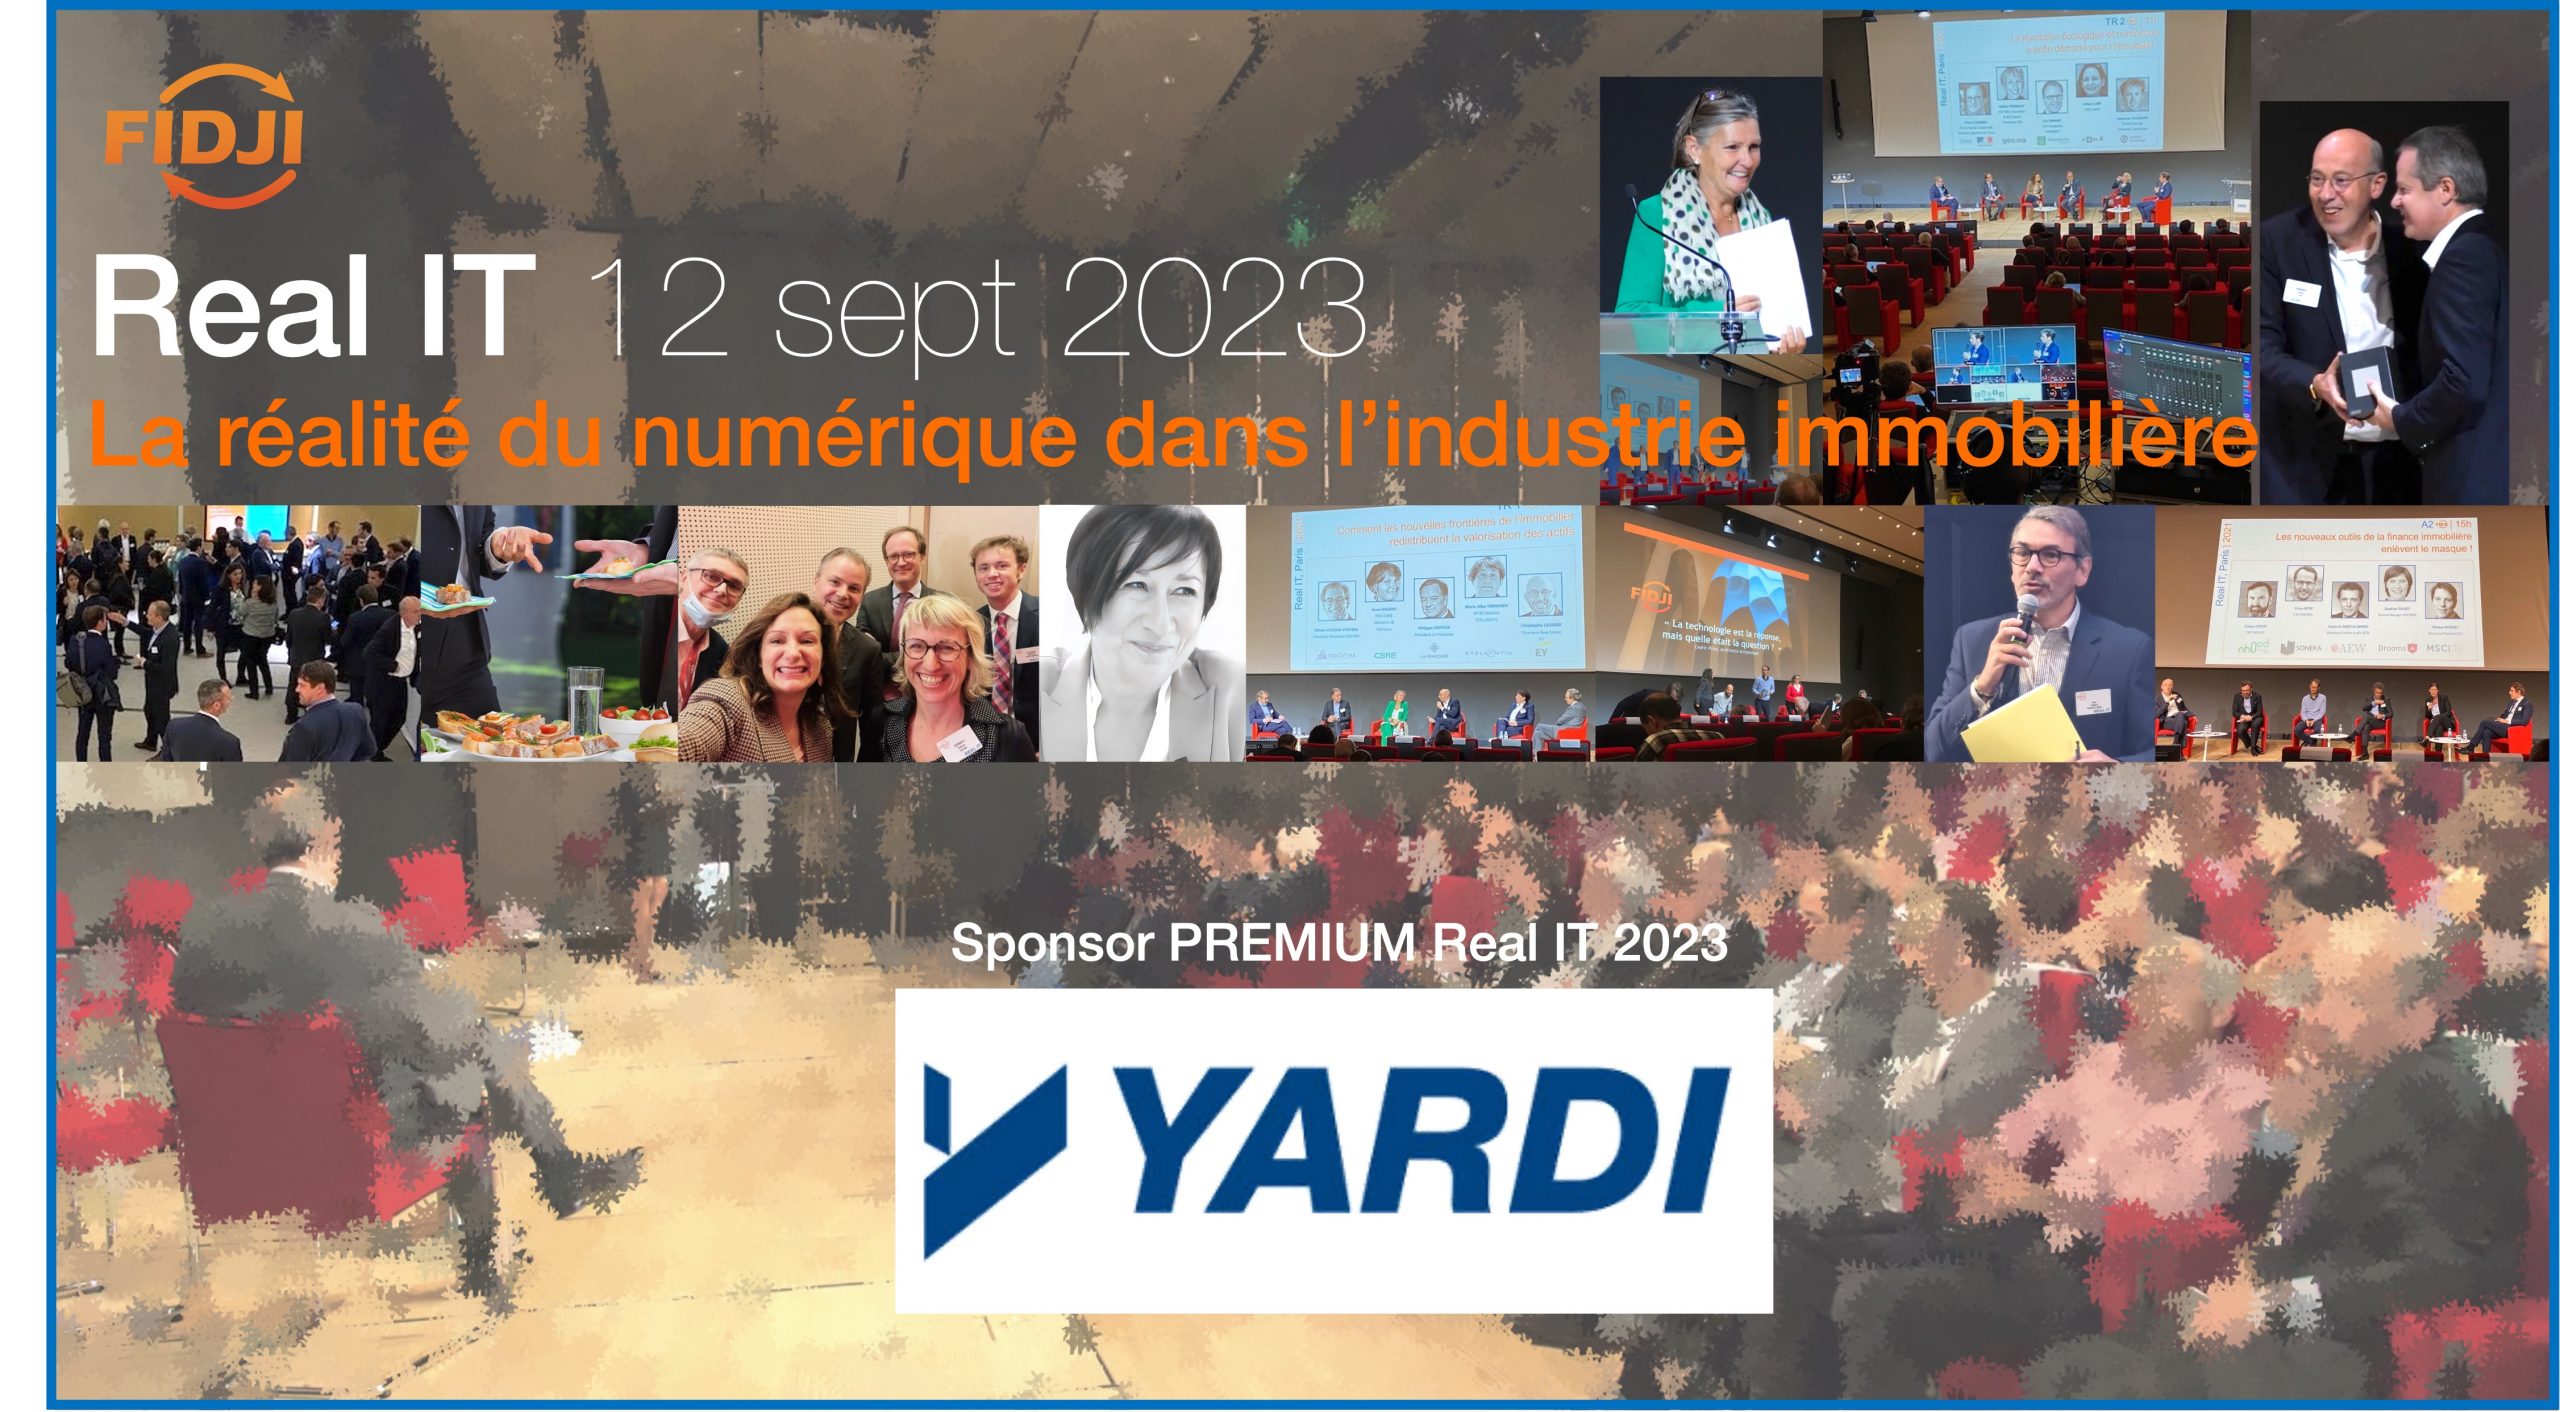 YARDI SYSTEMS, sponsor Premium de Real IT 2023